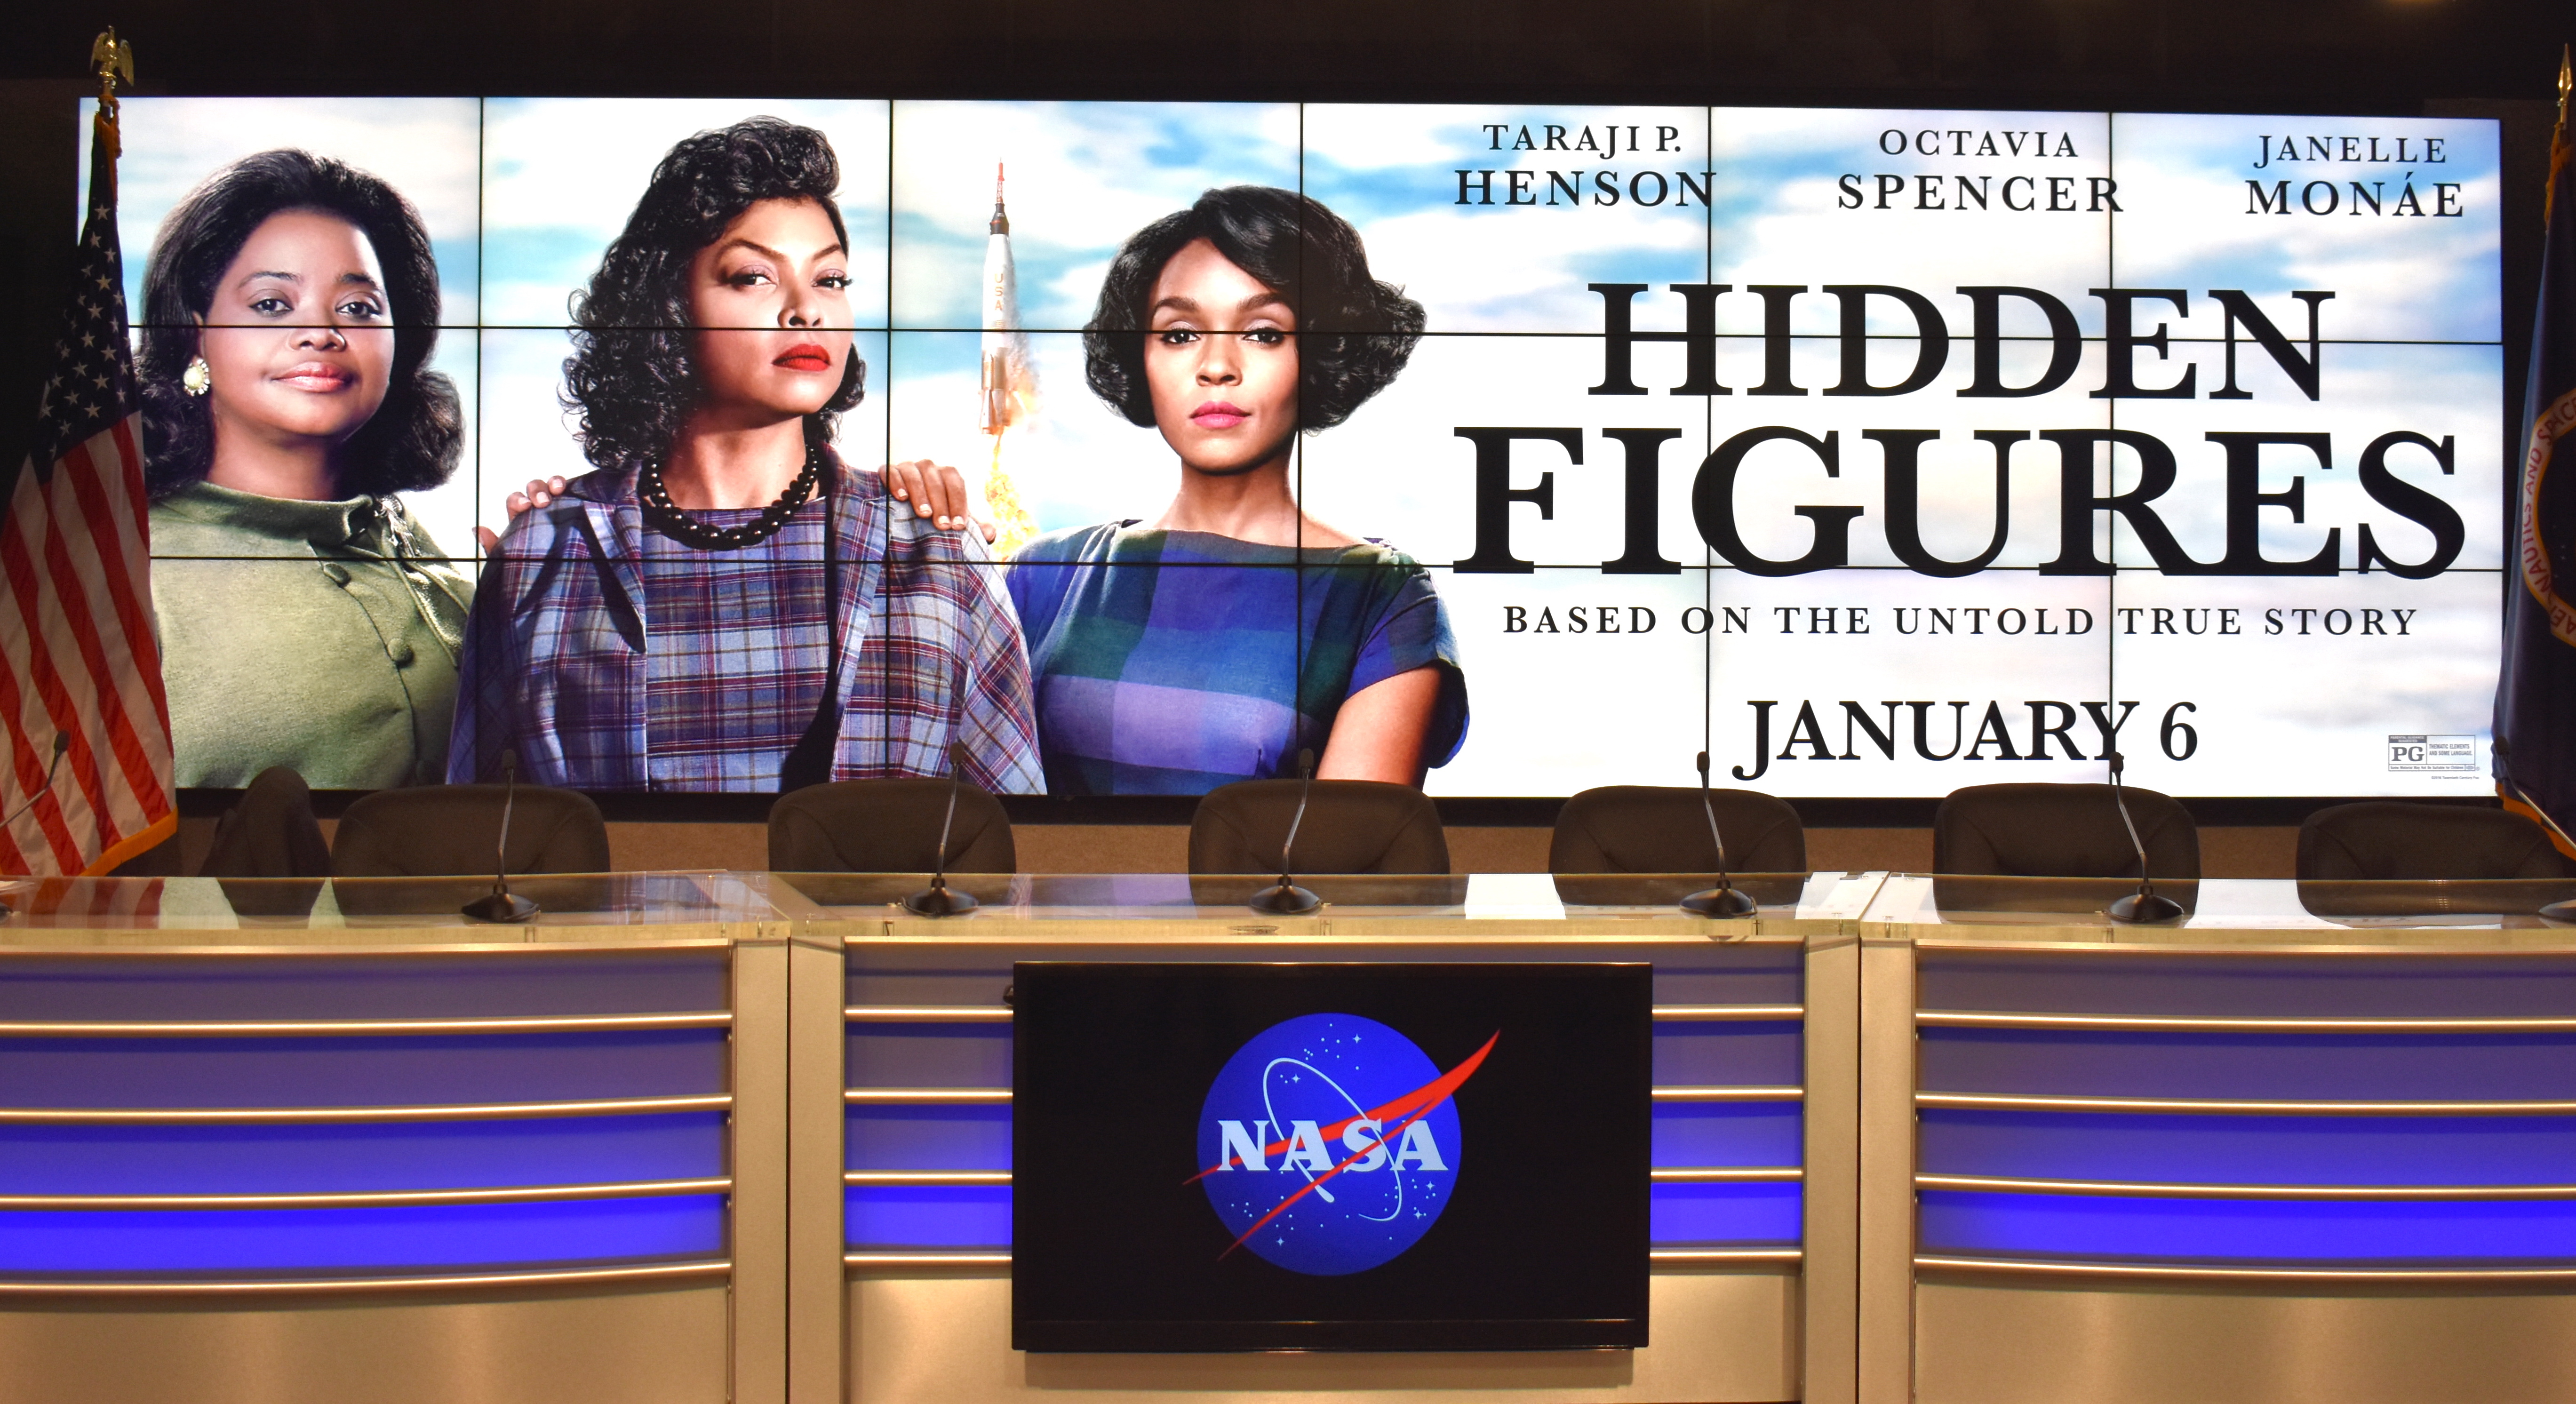 NASA’s media center features Hidden Figures.